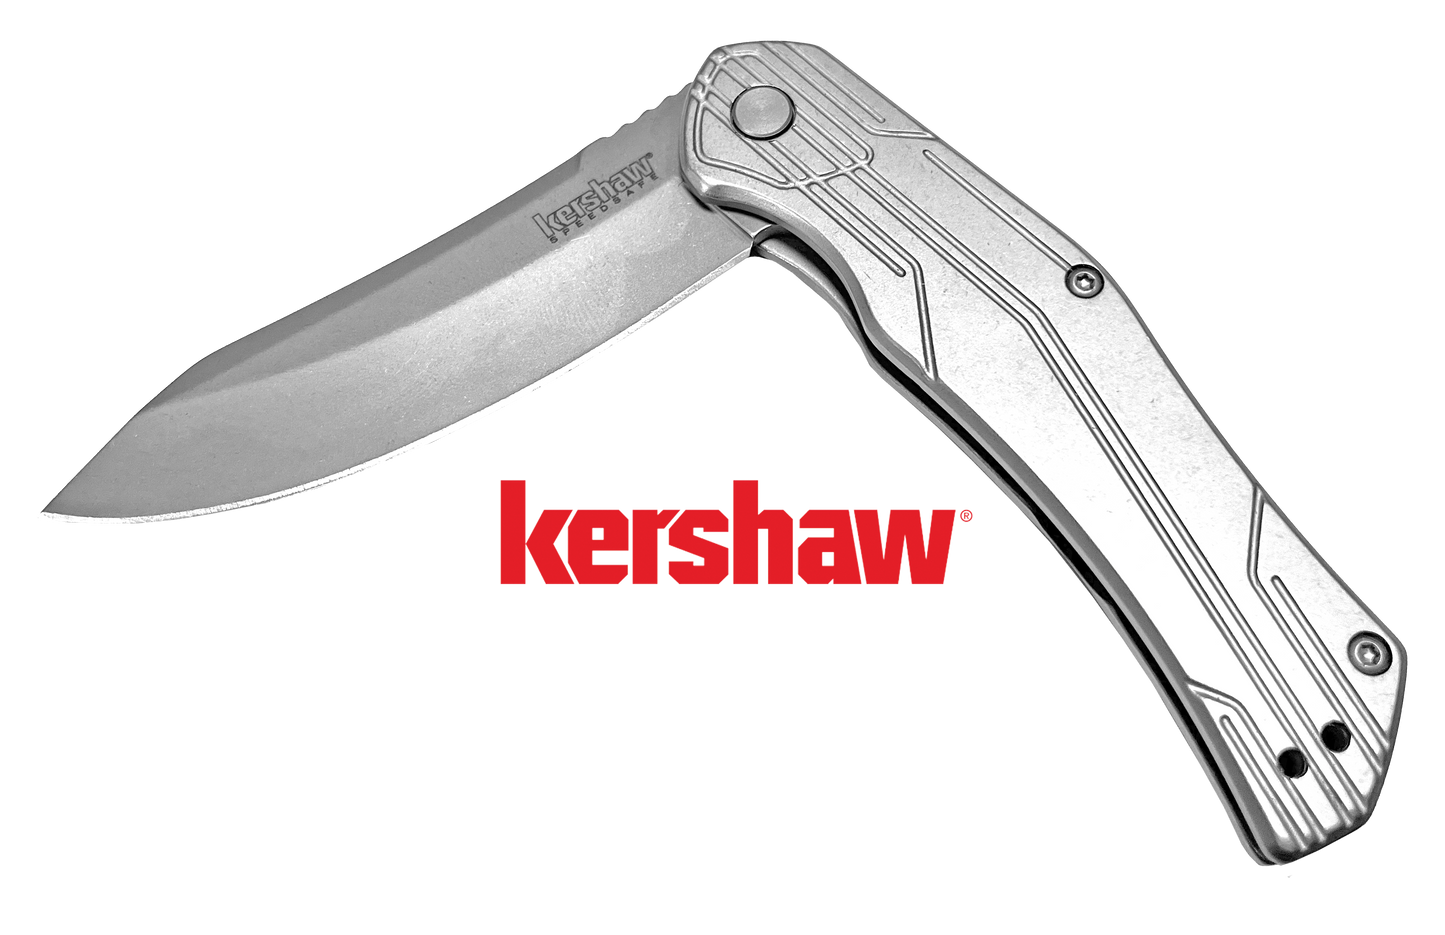 NEW! KERSHAW HUSKER pocket knife plus 1 year GLA subscription